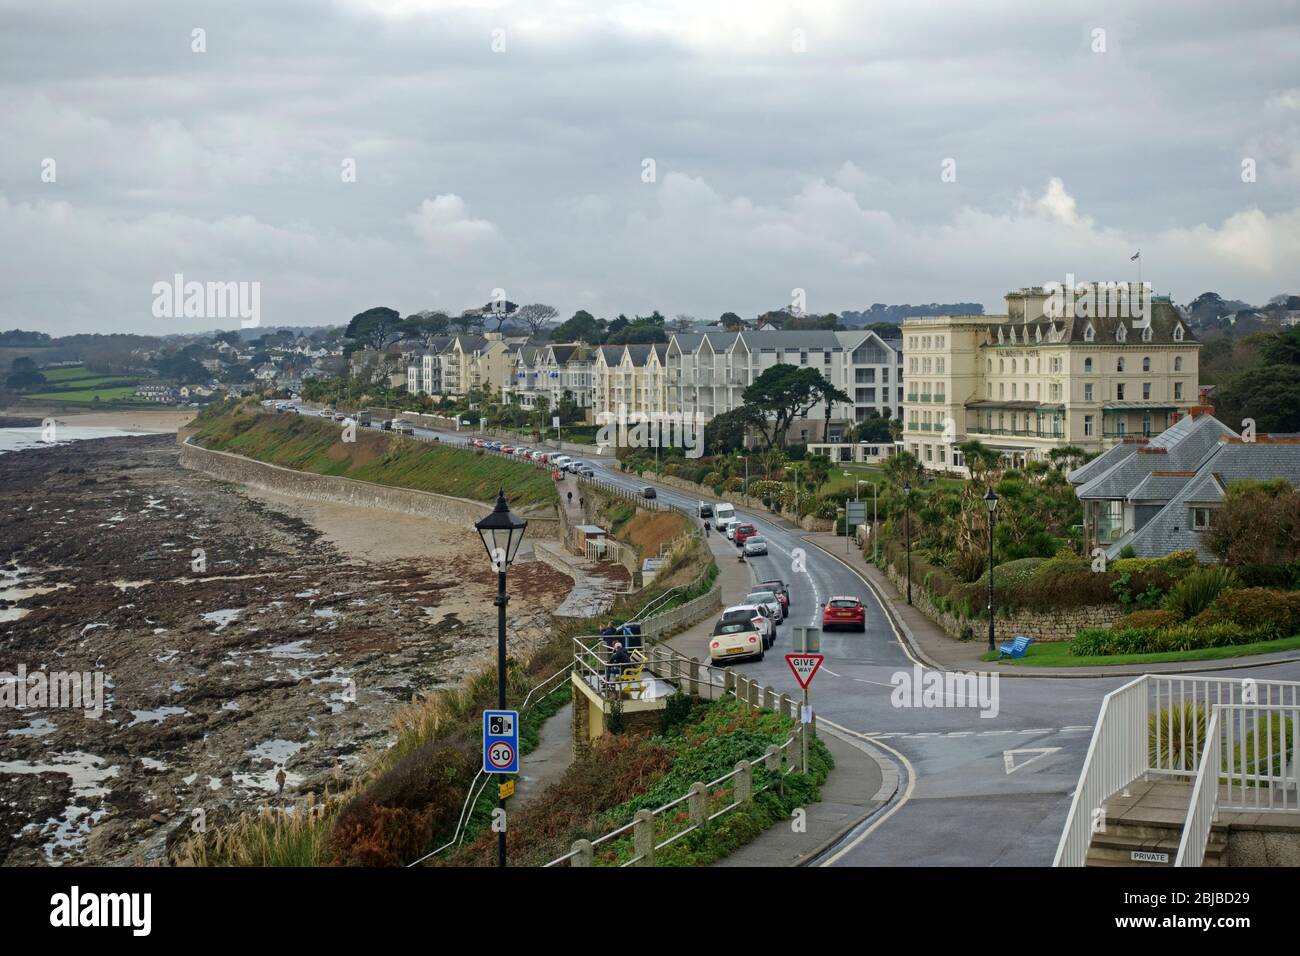 Hotels on seafront promenade, Gyllyngvase Beach, Falmouth, Cornwall, UK Stock Photo